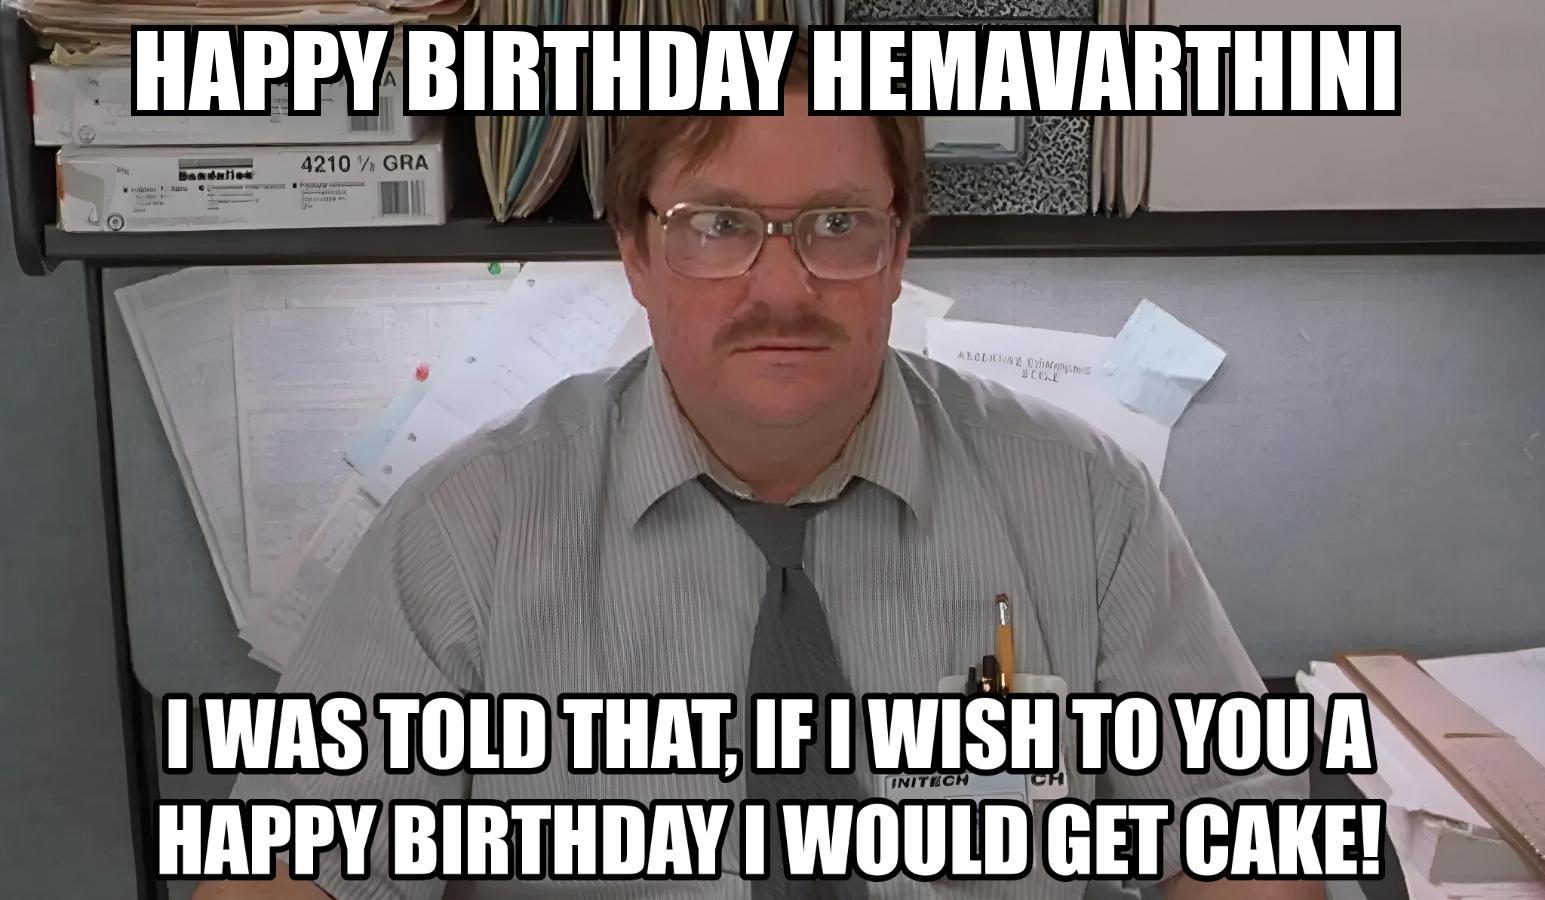 Happy Birthday Hemavarthini I Would Get A Cake Meme